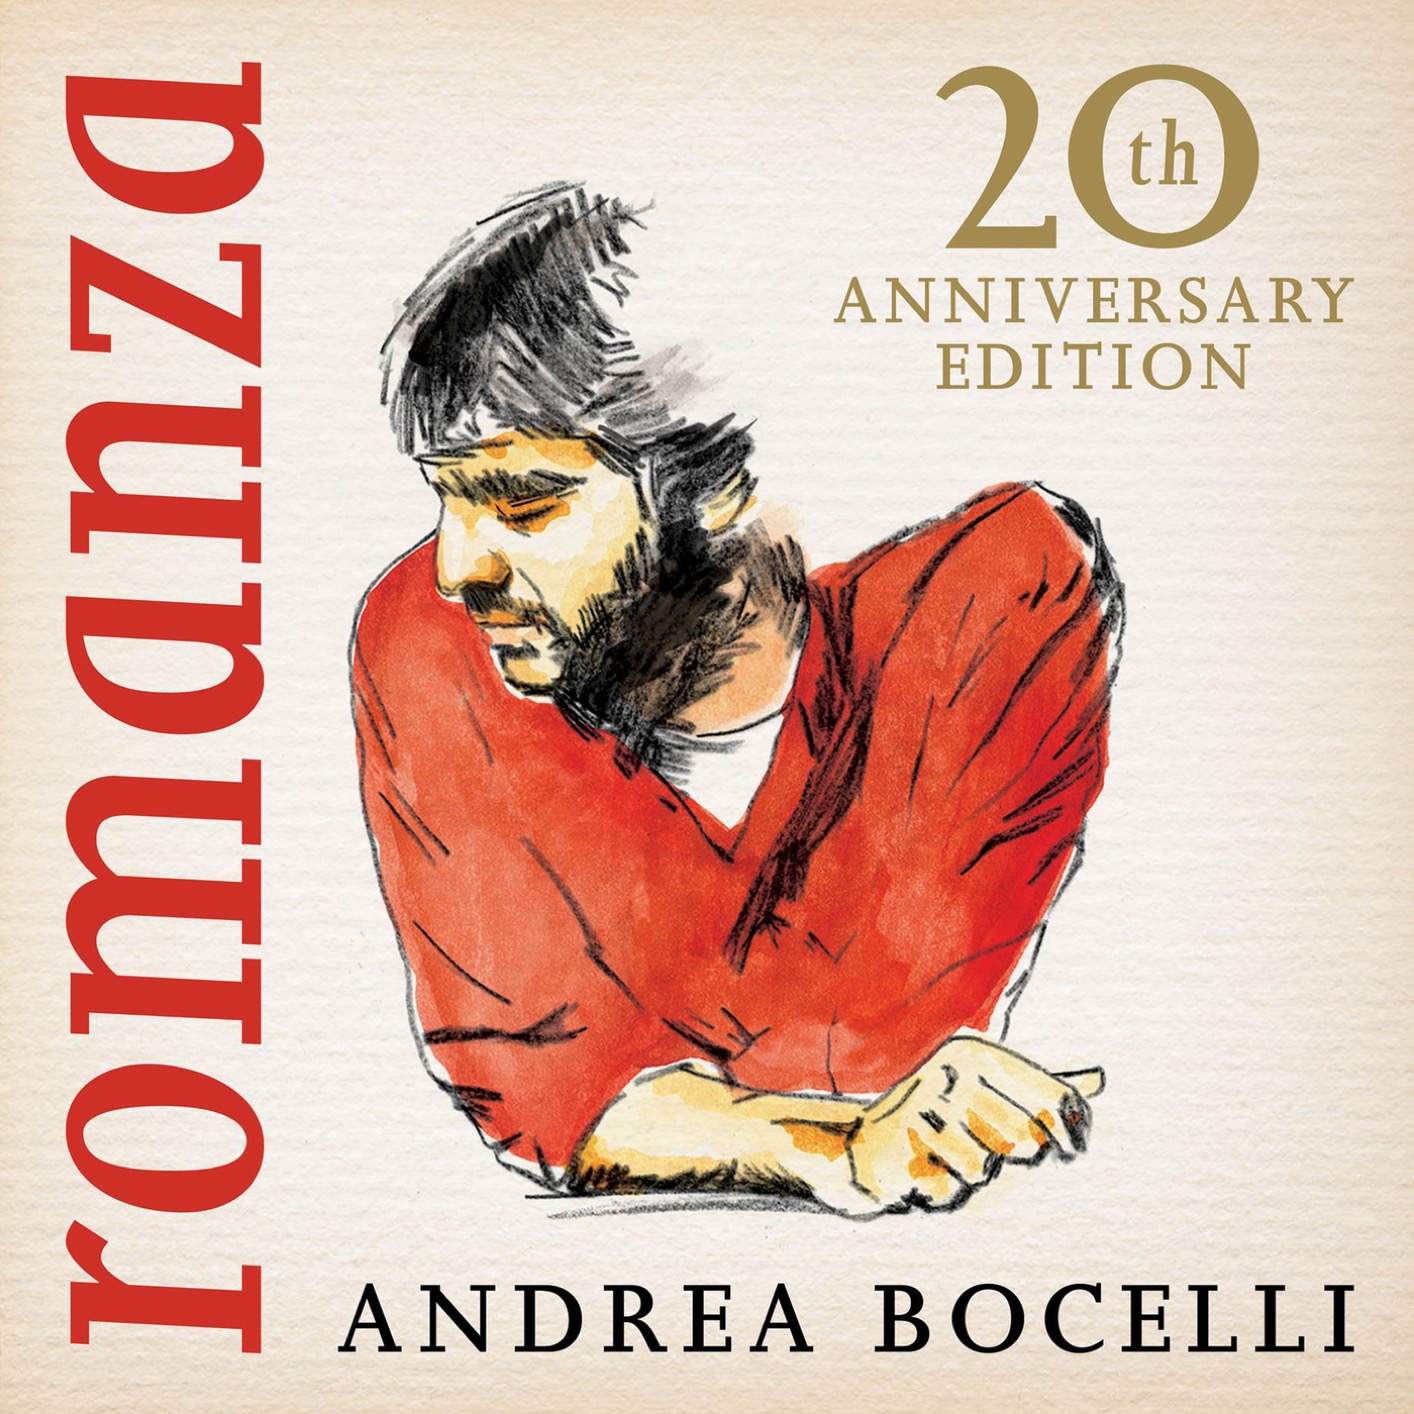 Andrea bocelli vivo. Бочелли Романза. Bocelli Andrea "Romanza". Андре́а Боче́лли альбом «Bocelli»,. Обложки альбомов Andrea.